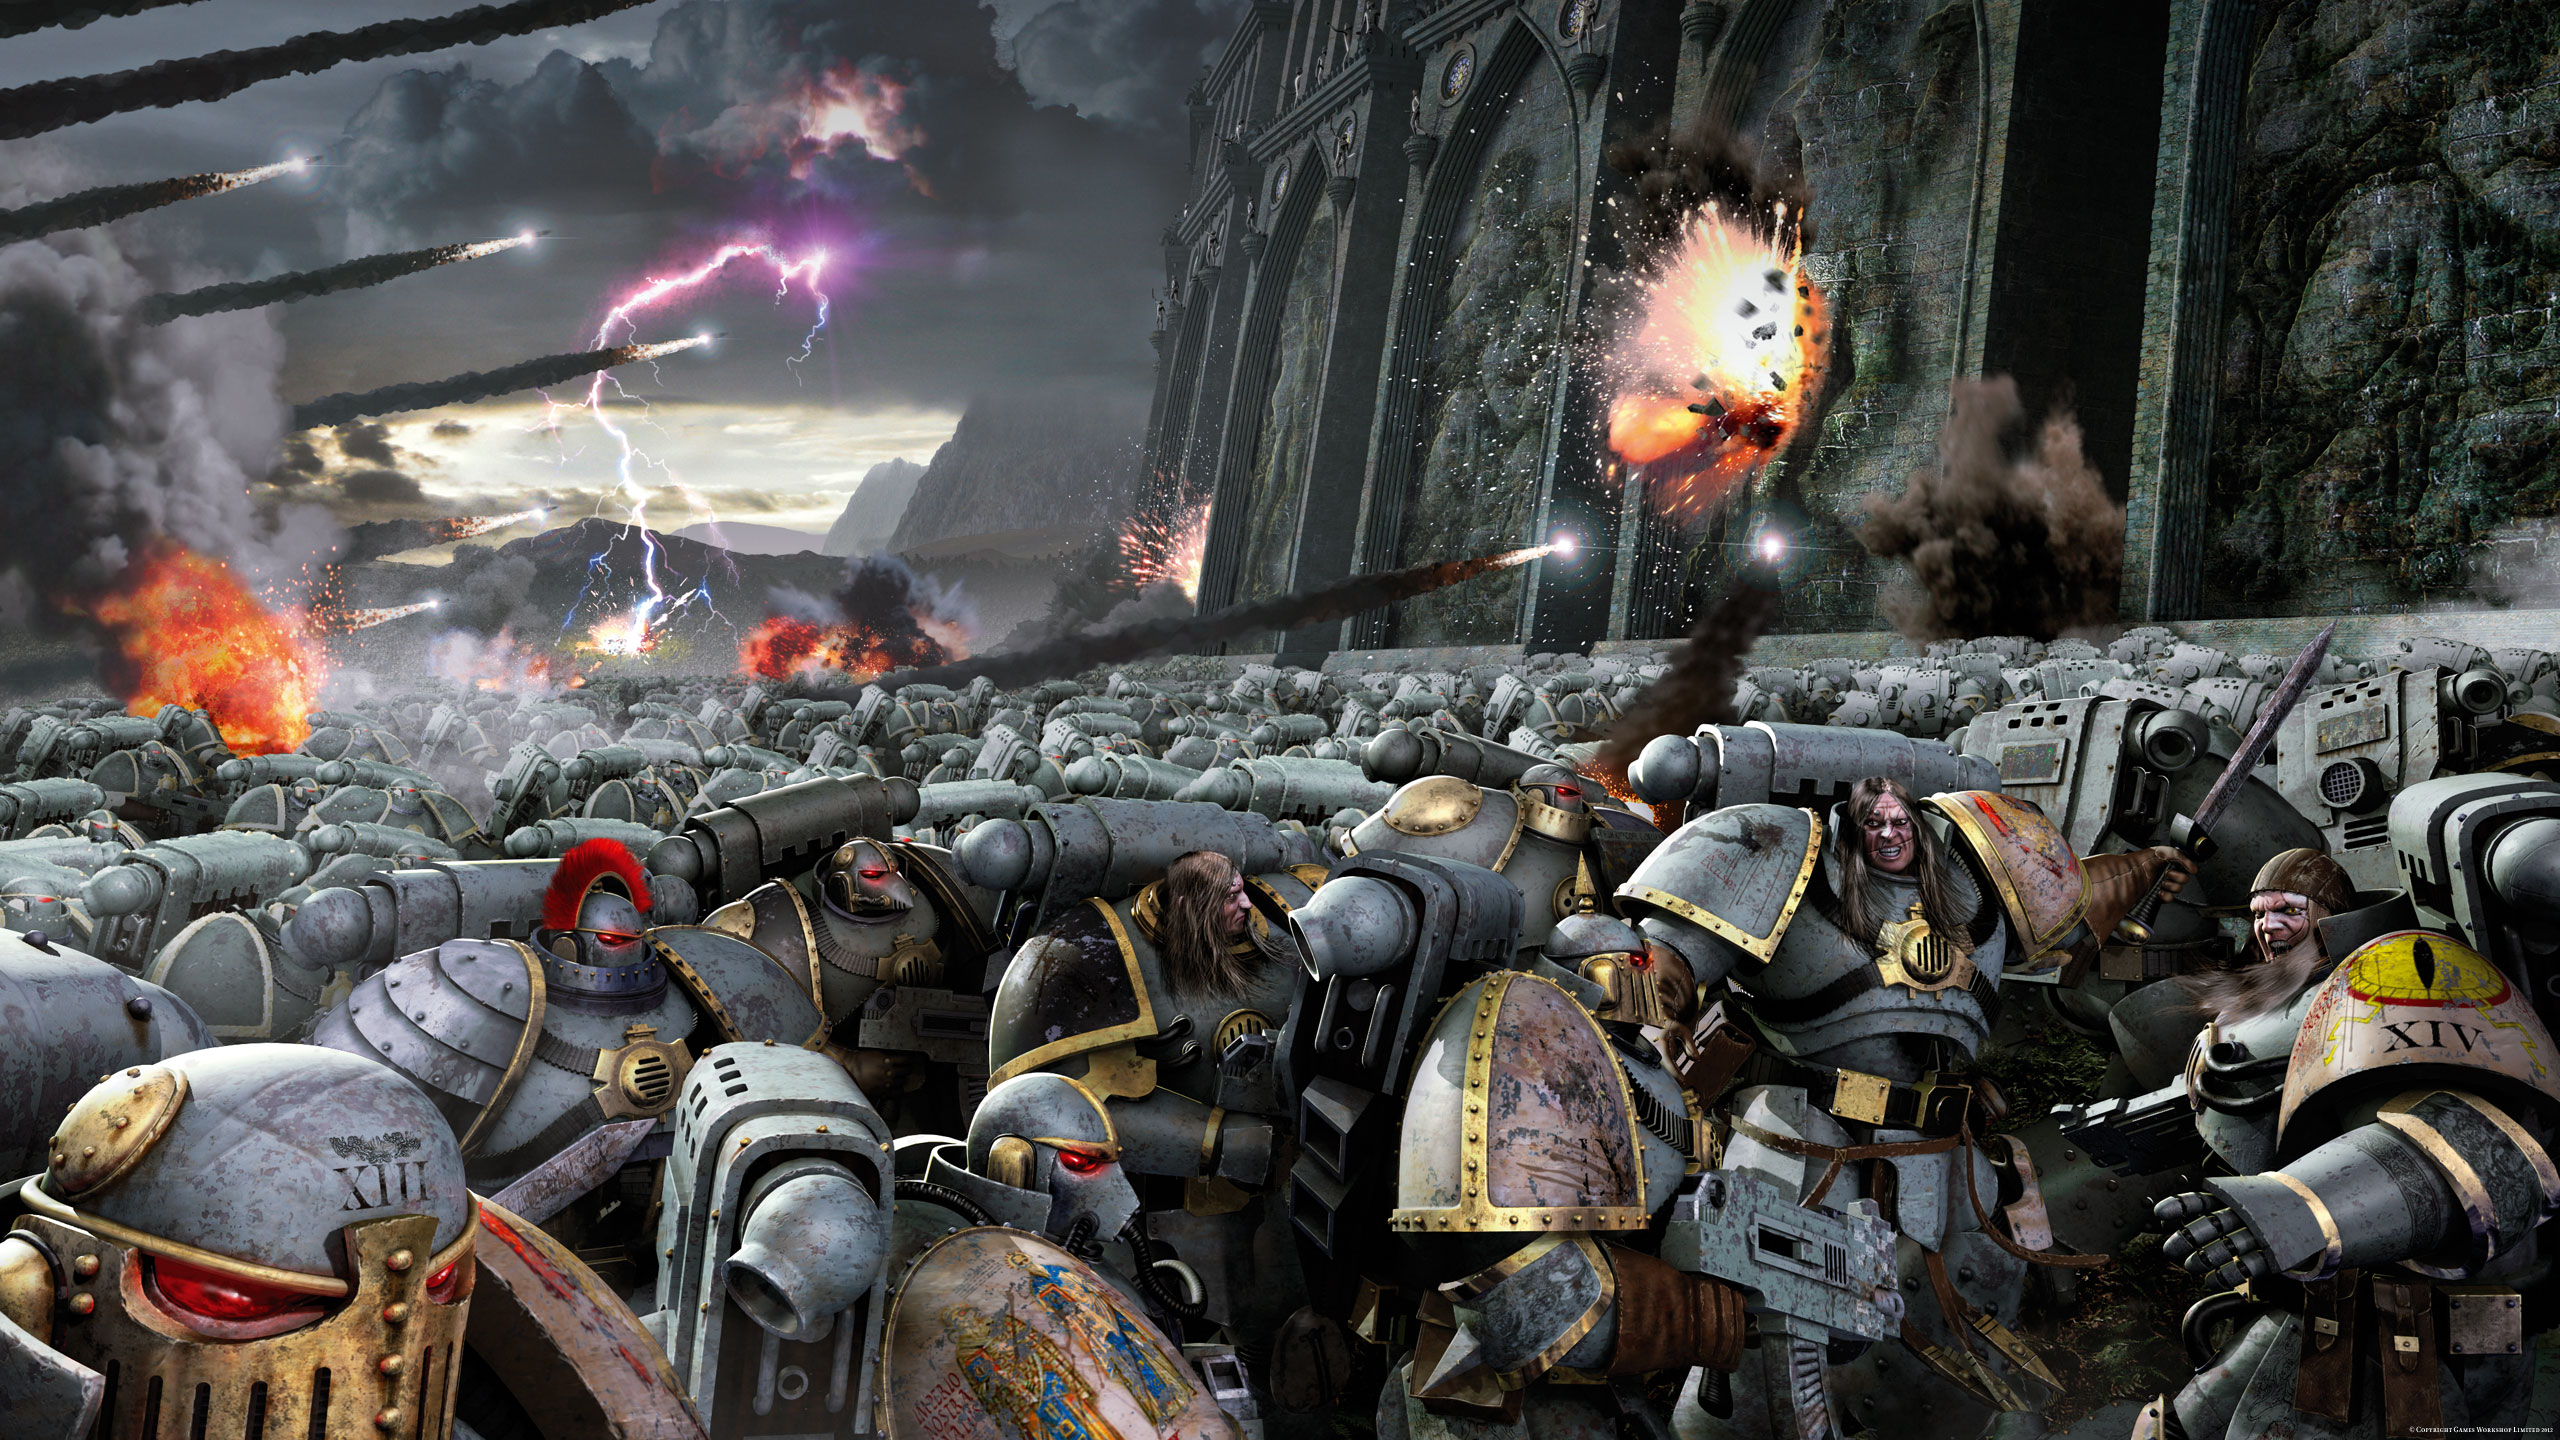 warhammer 40k wallpaper,action adventure game,pc game,strategy video game,rebellion,battle